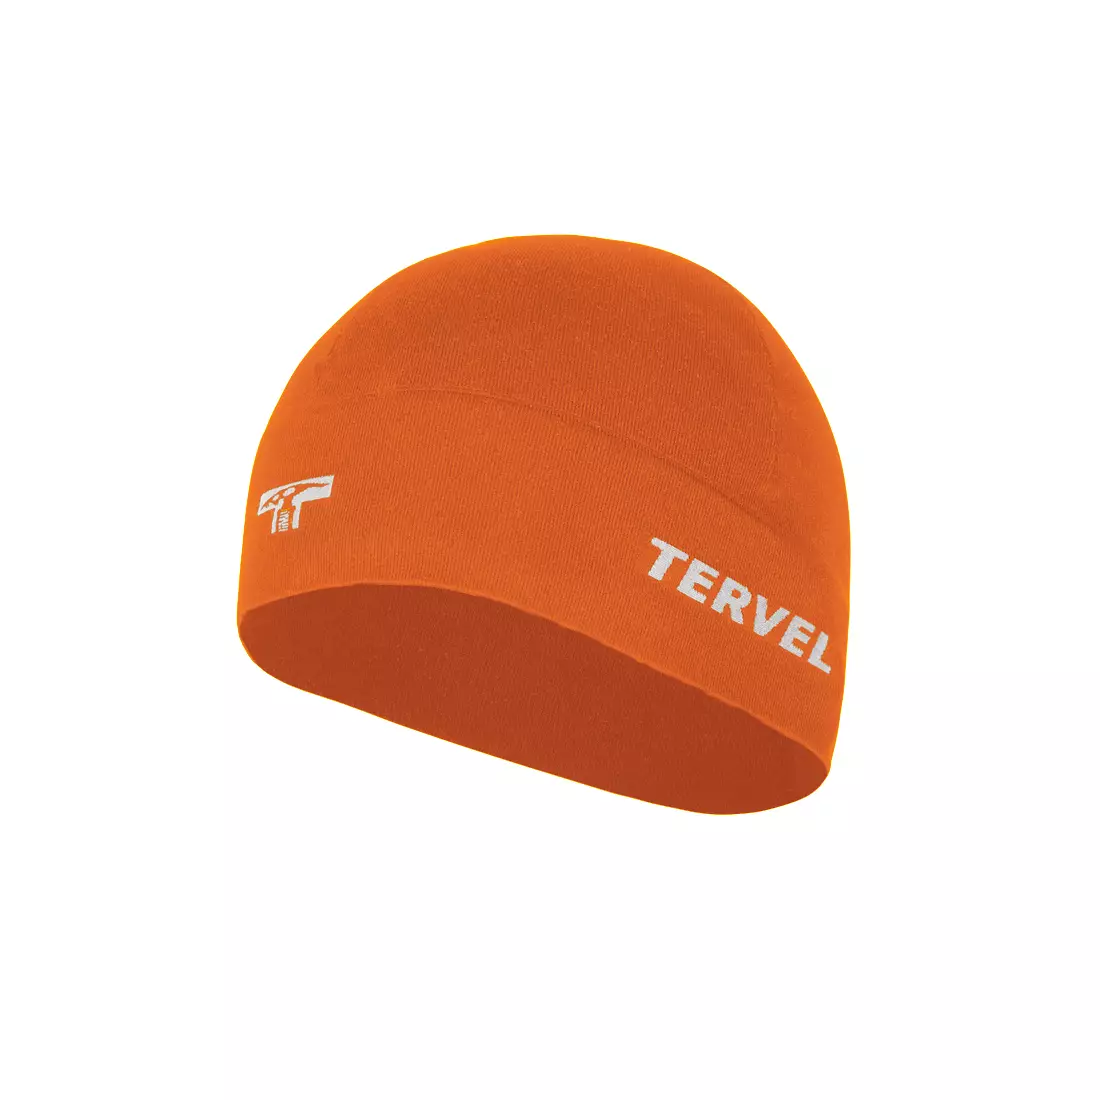 TERVEL 7001 - COMFORTLINE - Trainingskappe, Farbe: Orange, Größe: Universal